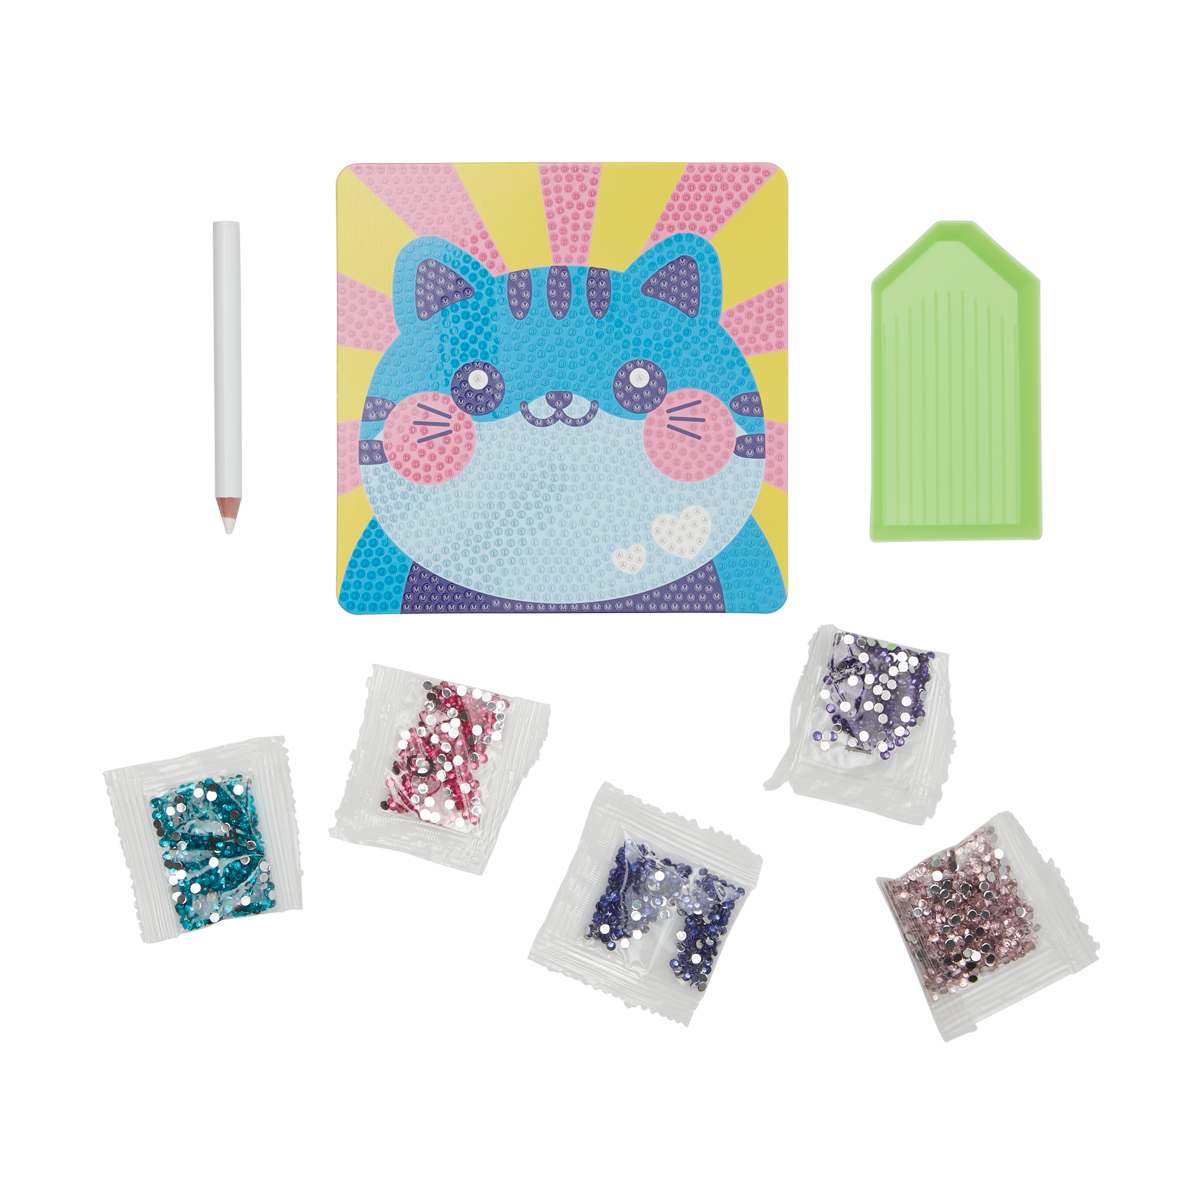 OOLY view of Razzle Dazzle DIY Gem Art Kit - Cutesy Cat contents